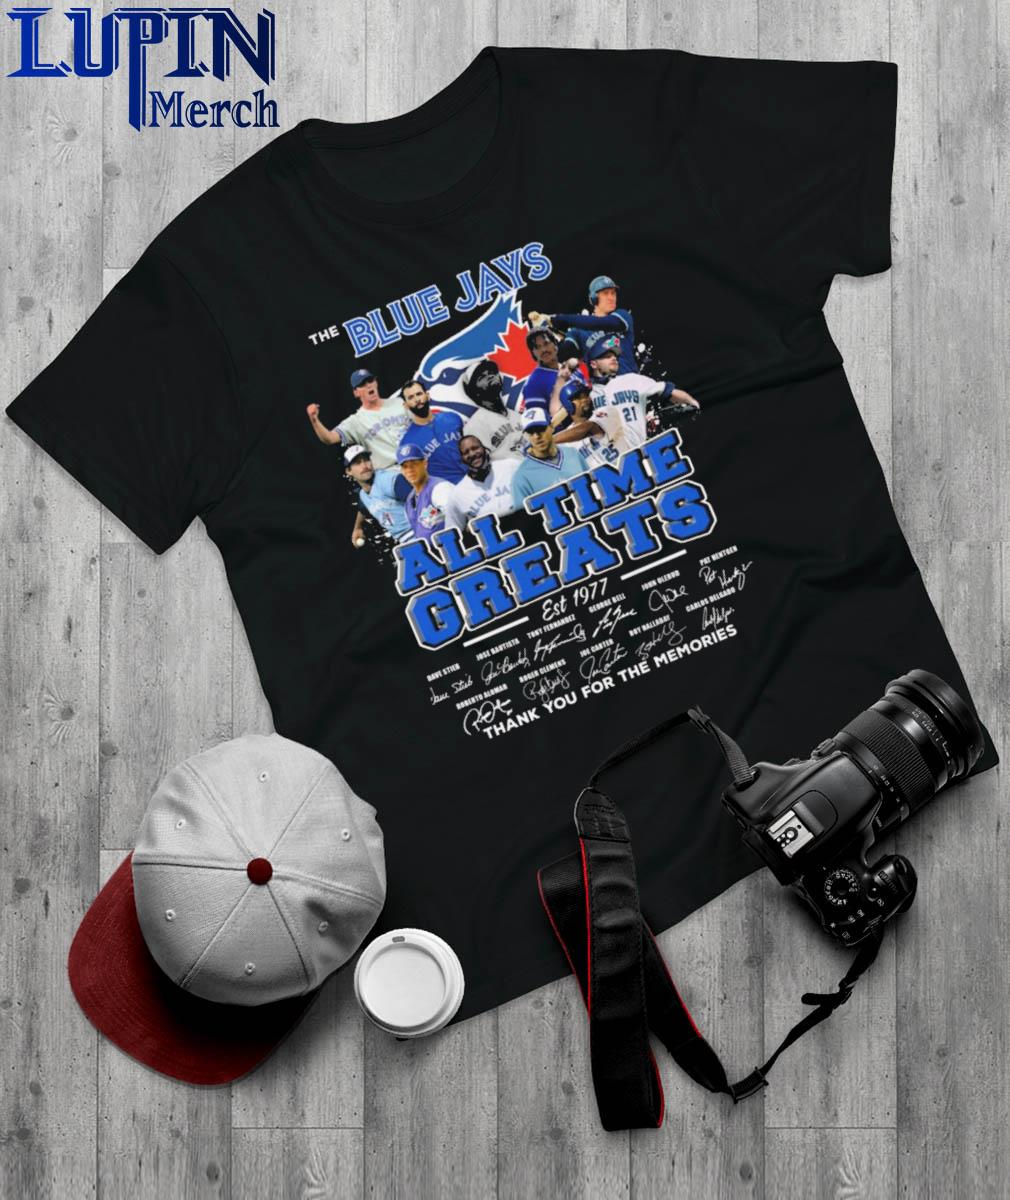 Vintage Toronto Blue Jays T-Shirt Baseball Shirt Est 1977